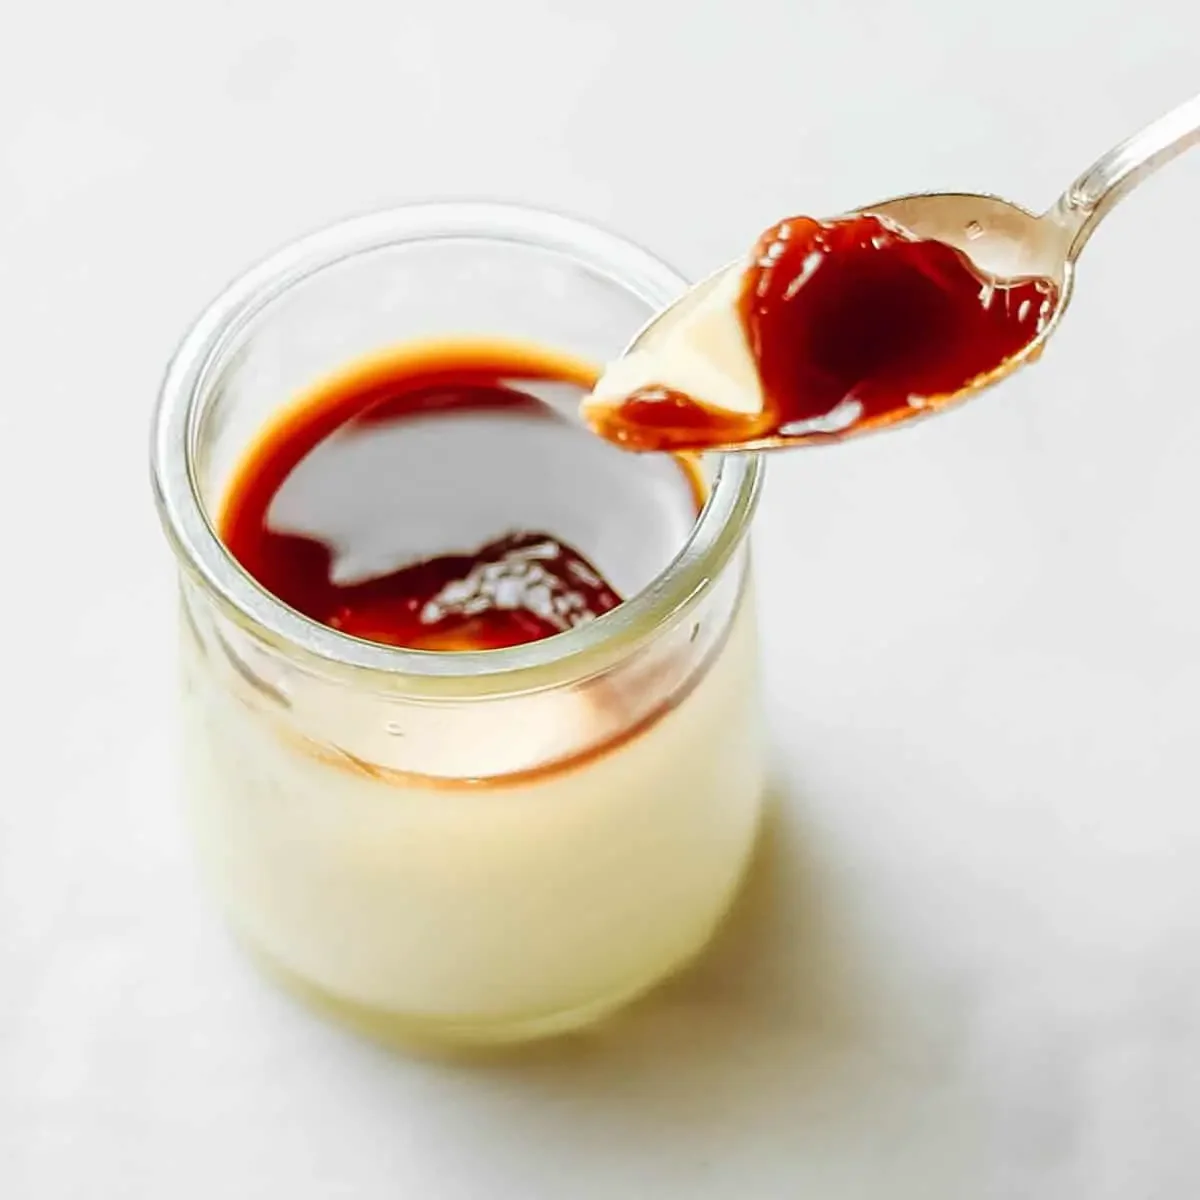 【Low Carb】 Easy Caramel Pudding Recipe